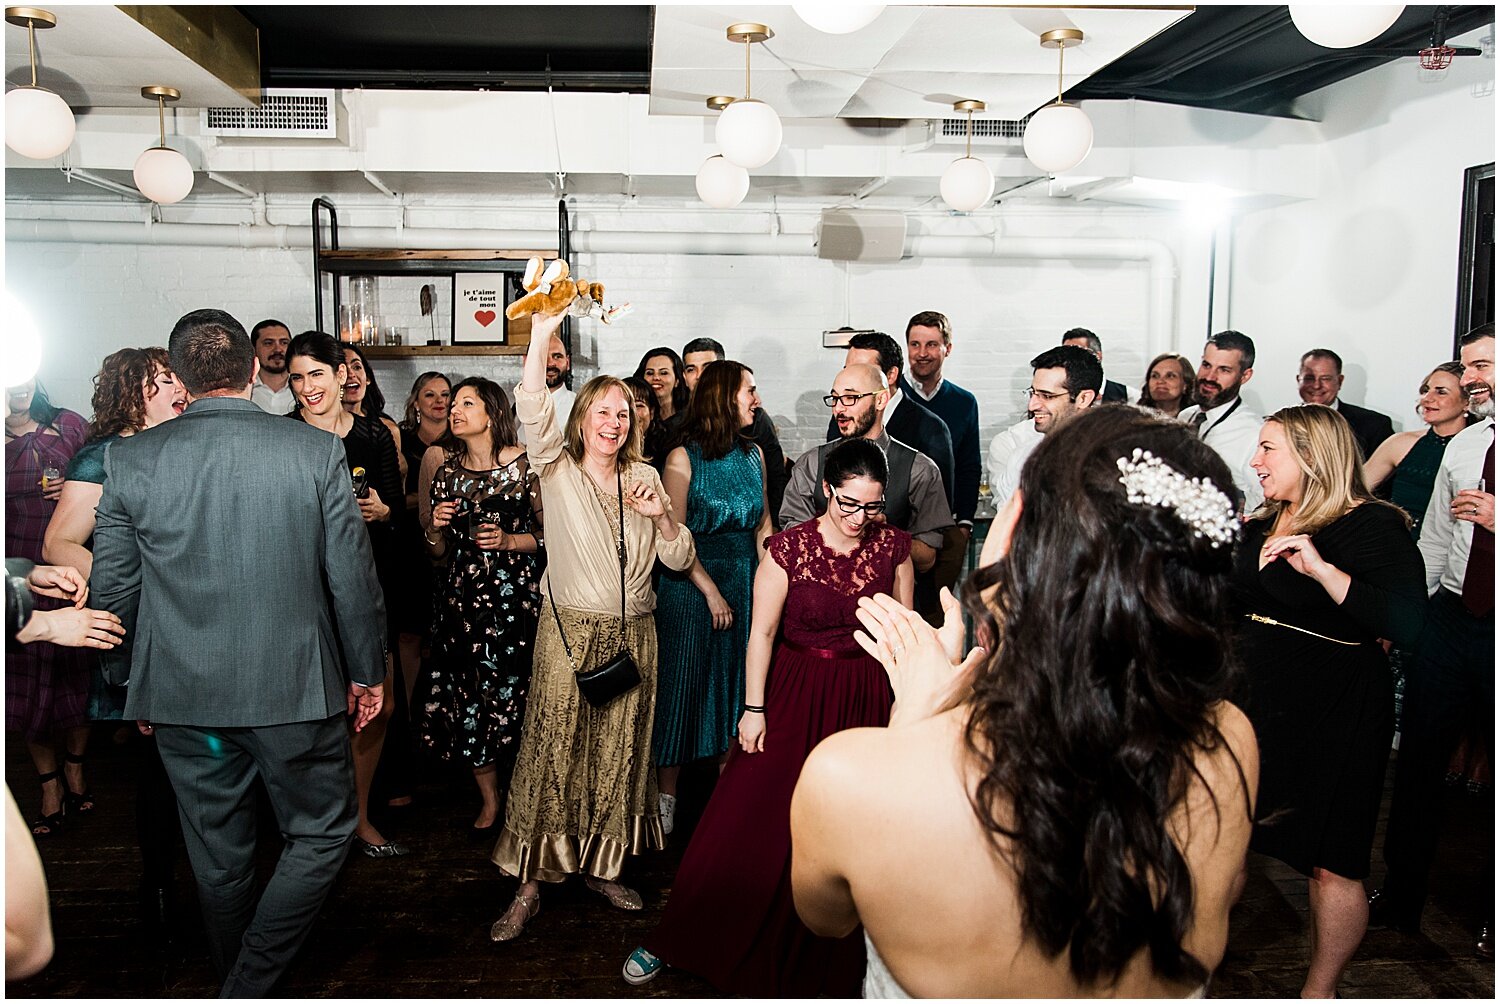 Havens-Kitchen-Wedding-Venue-NYC-Apollo-Fields-Weddings-Photographers-New-York-City-114.jpg